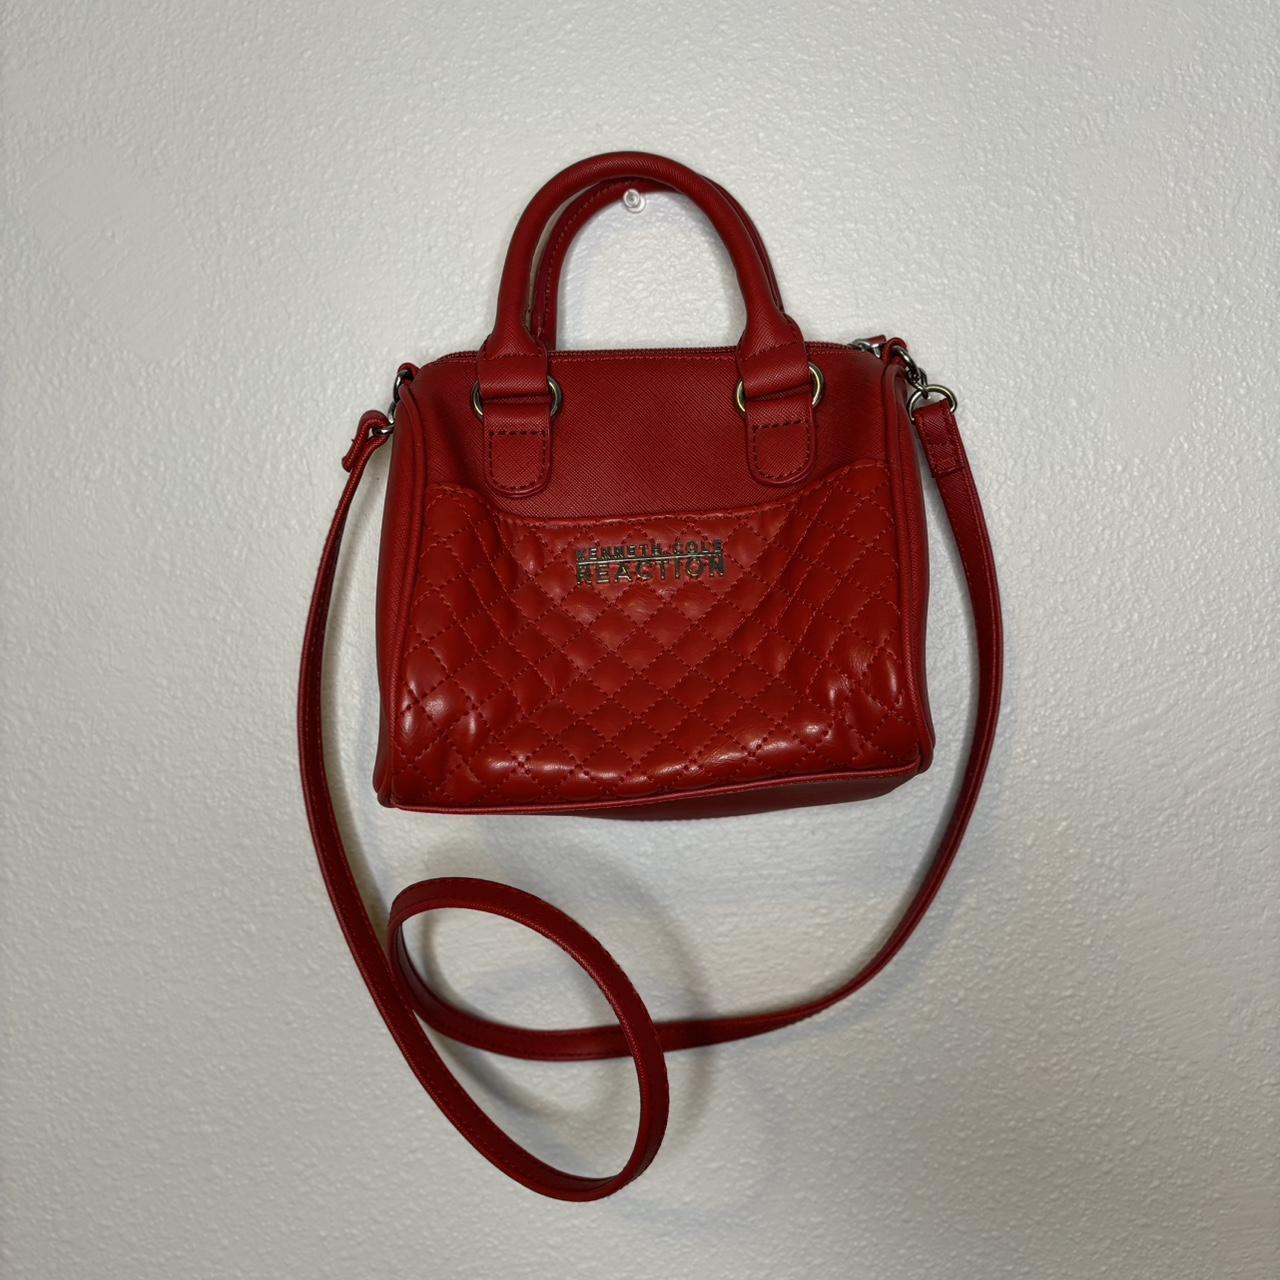 Kenneth Cole Reaction Handbags & Purses for Women | Nordstrom Rack